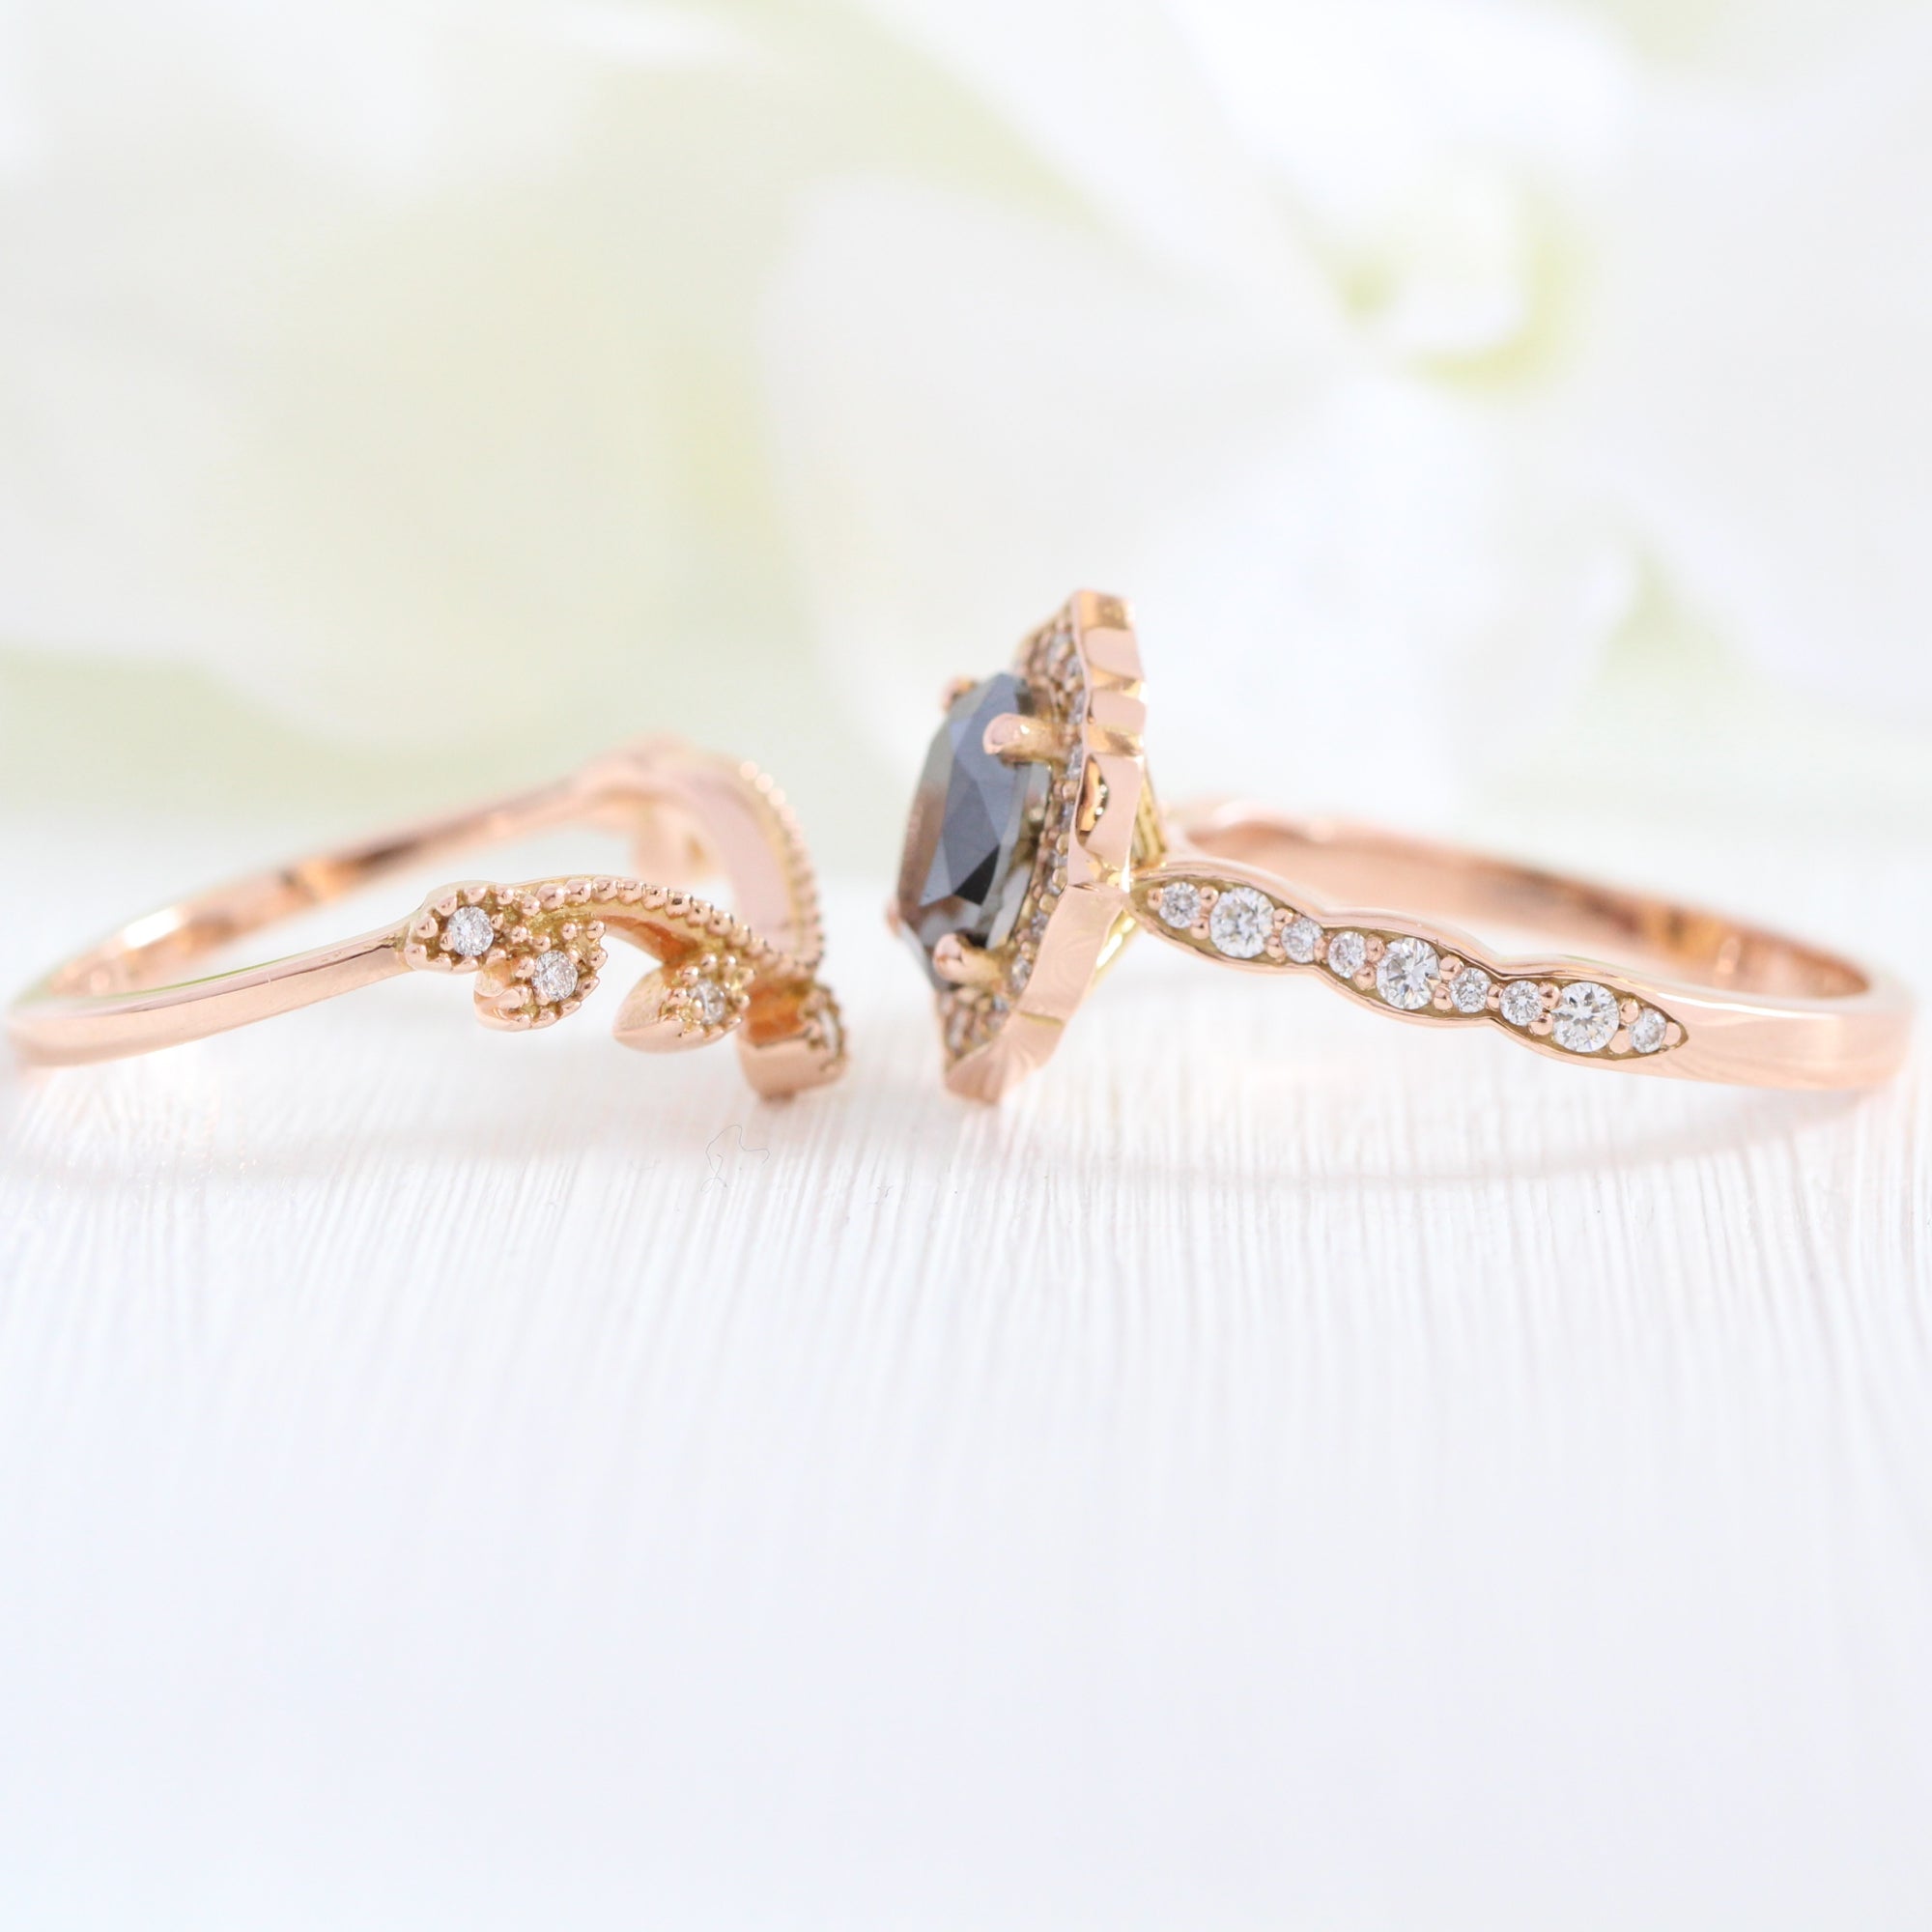 oval black diamond engagement ring rose gold leaf wedding band bridal ring set la more design jewelry